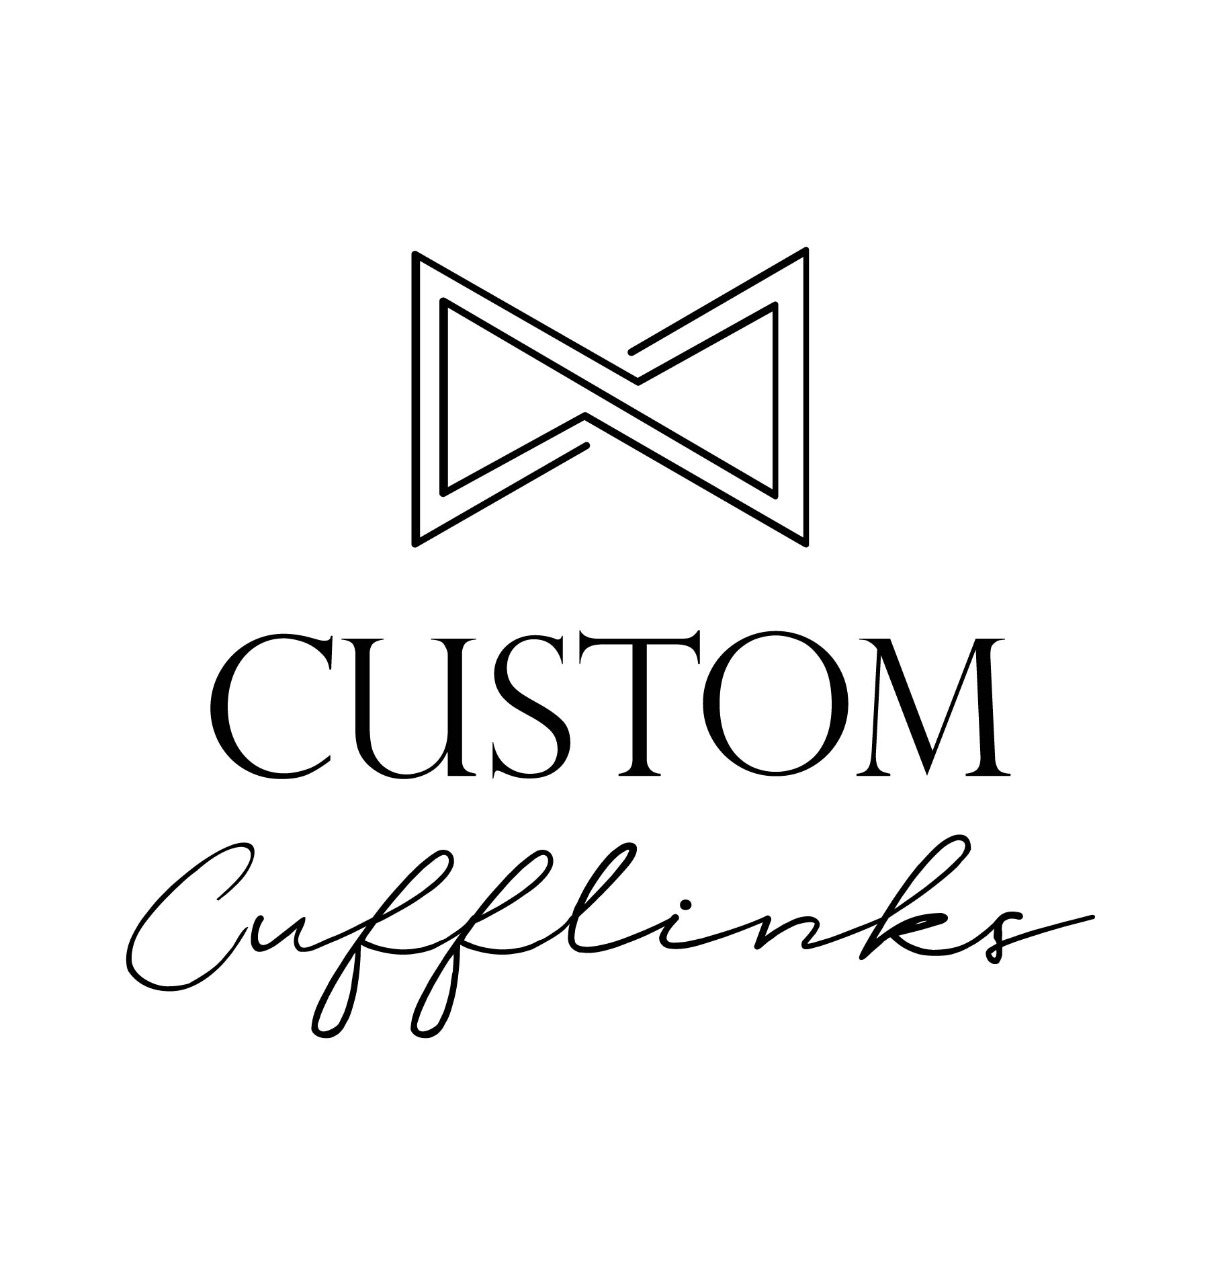 Custom Cufflinks